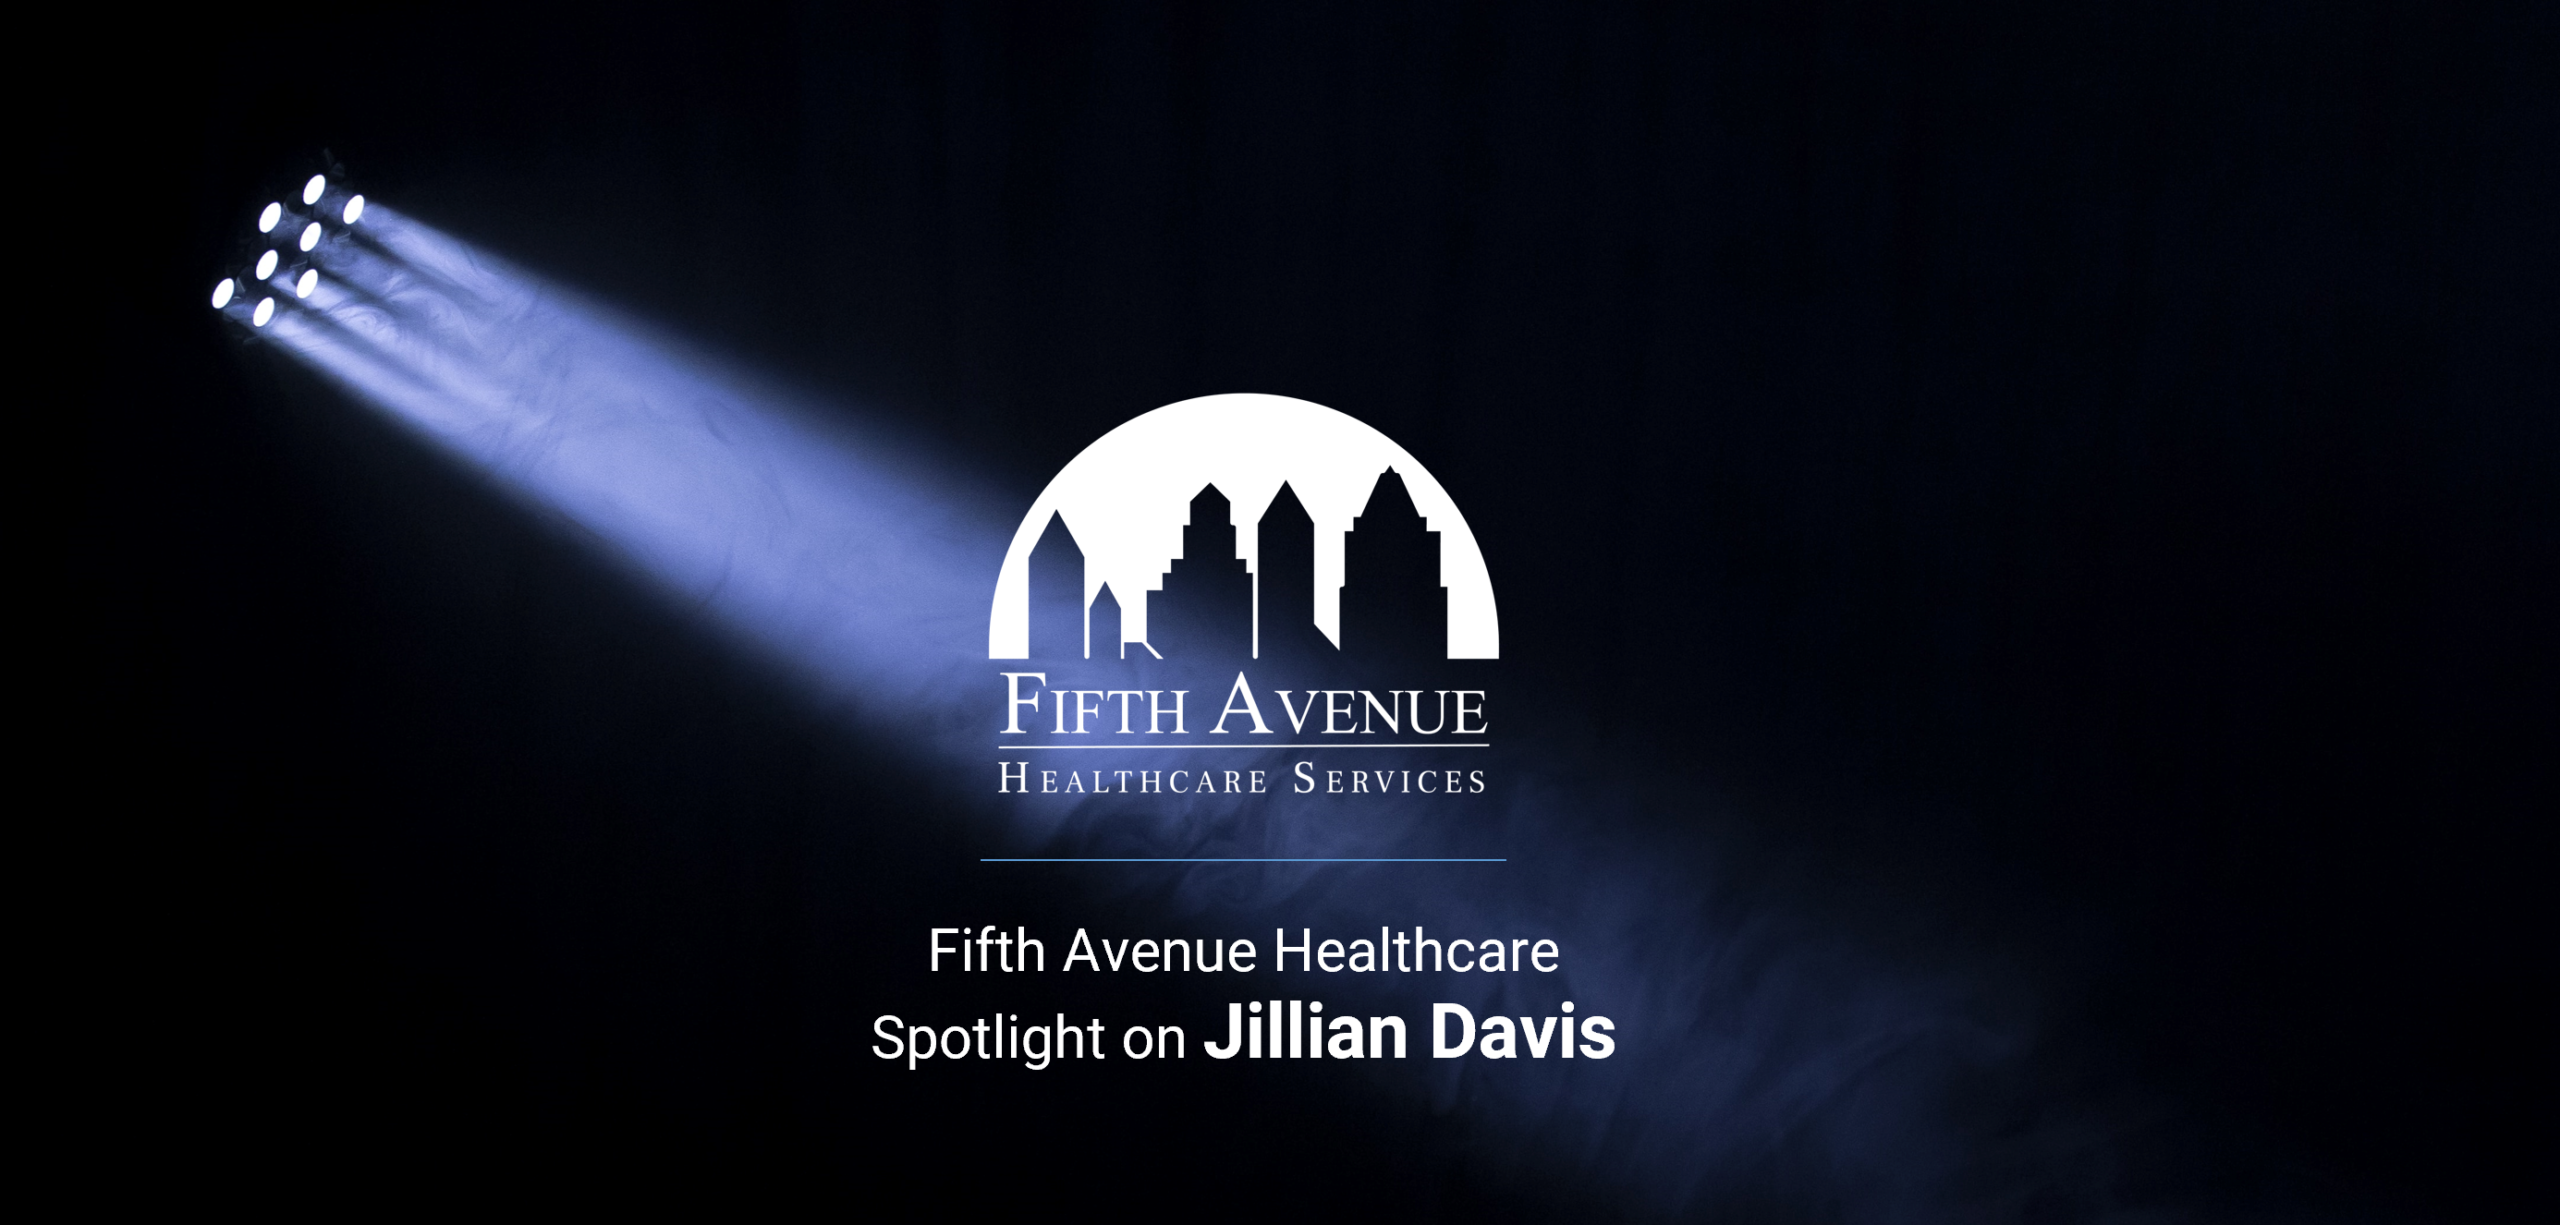 FifthAvenueHealthcareServices.com Fifth Avenue Spotlight Jillian Davis